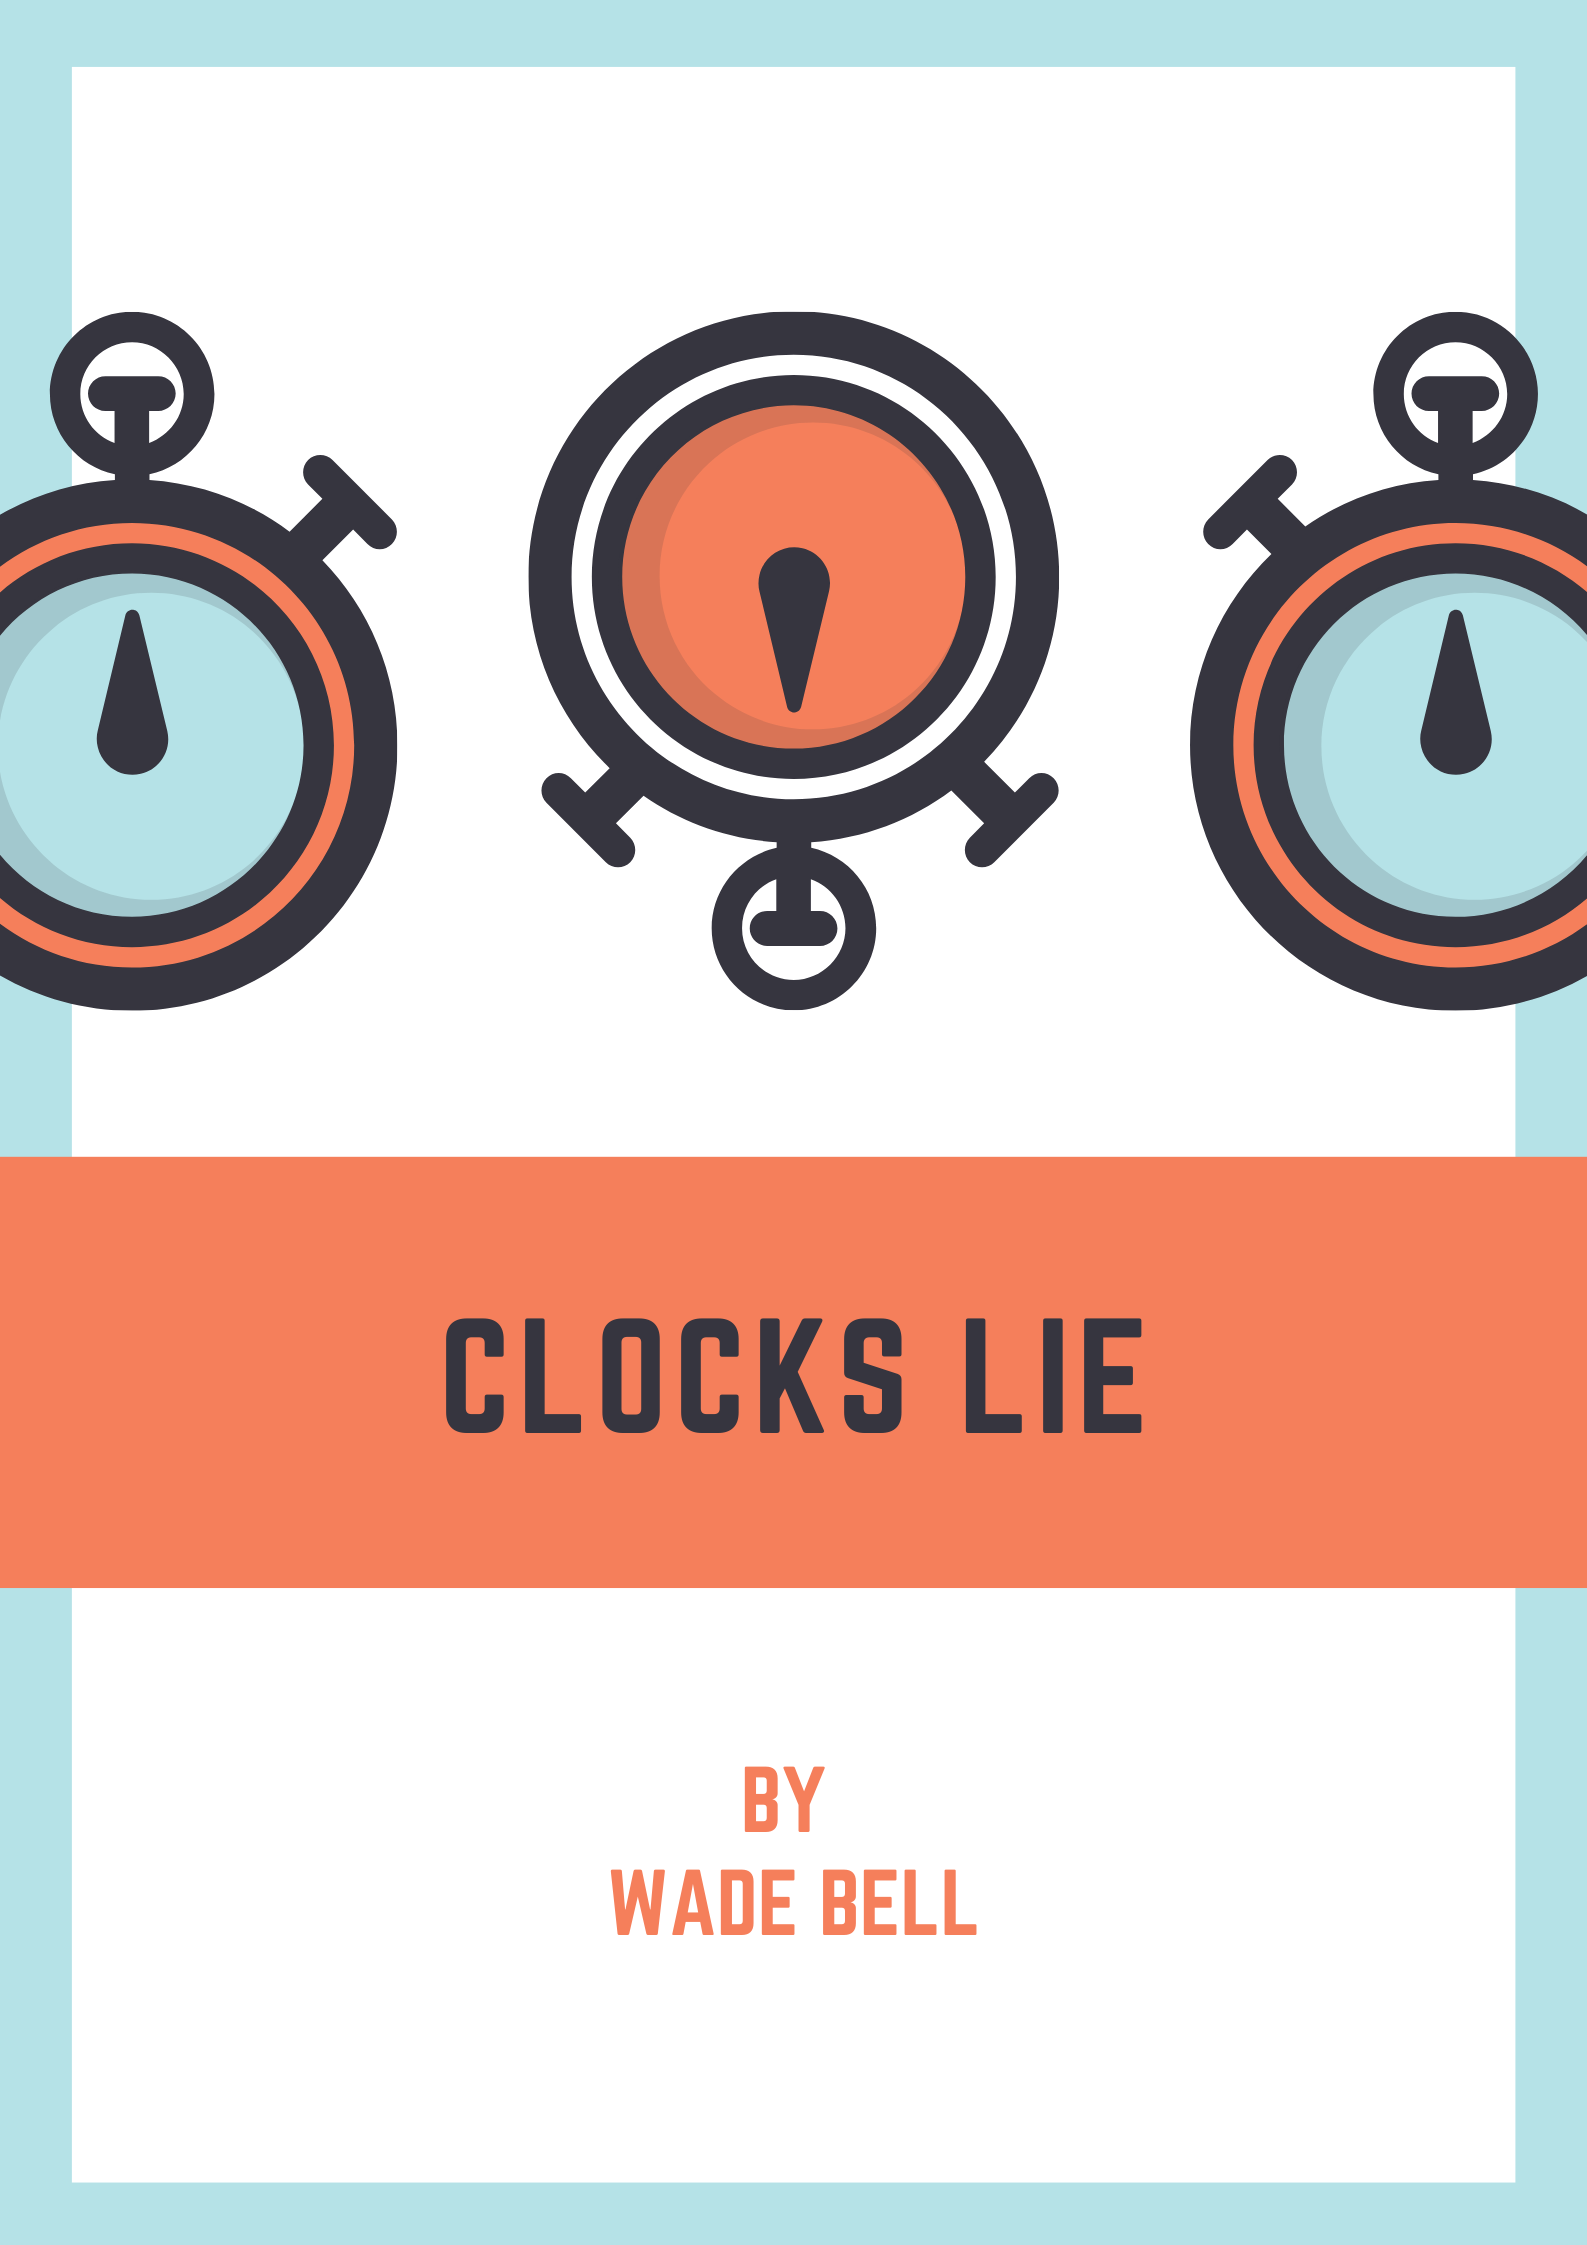 Clocks Lie by Wade Bell